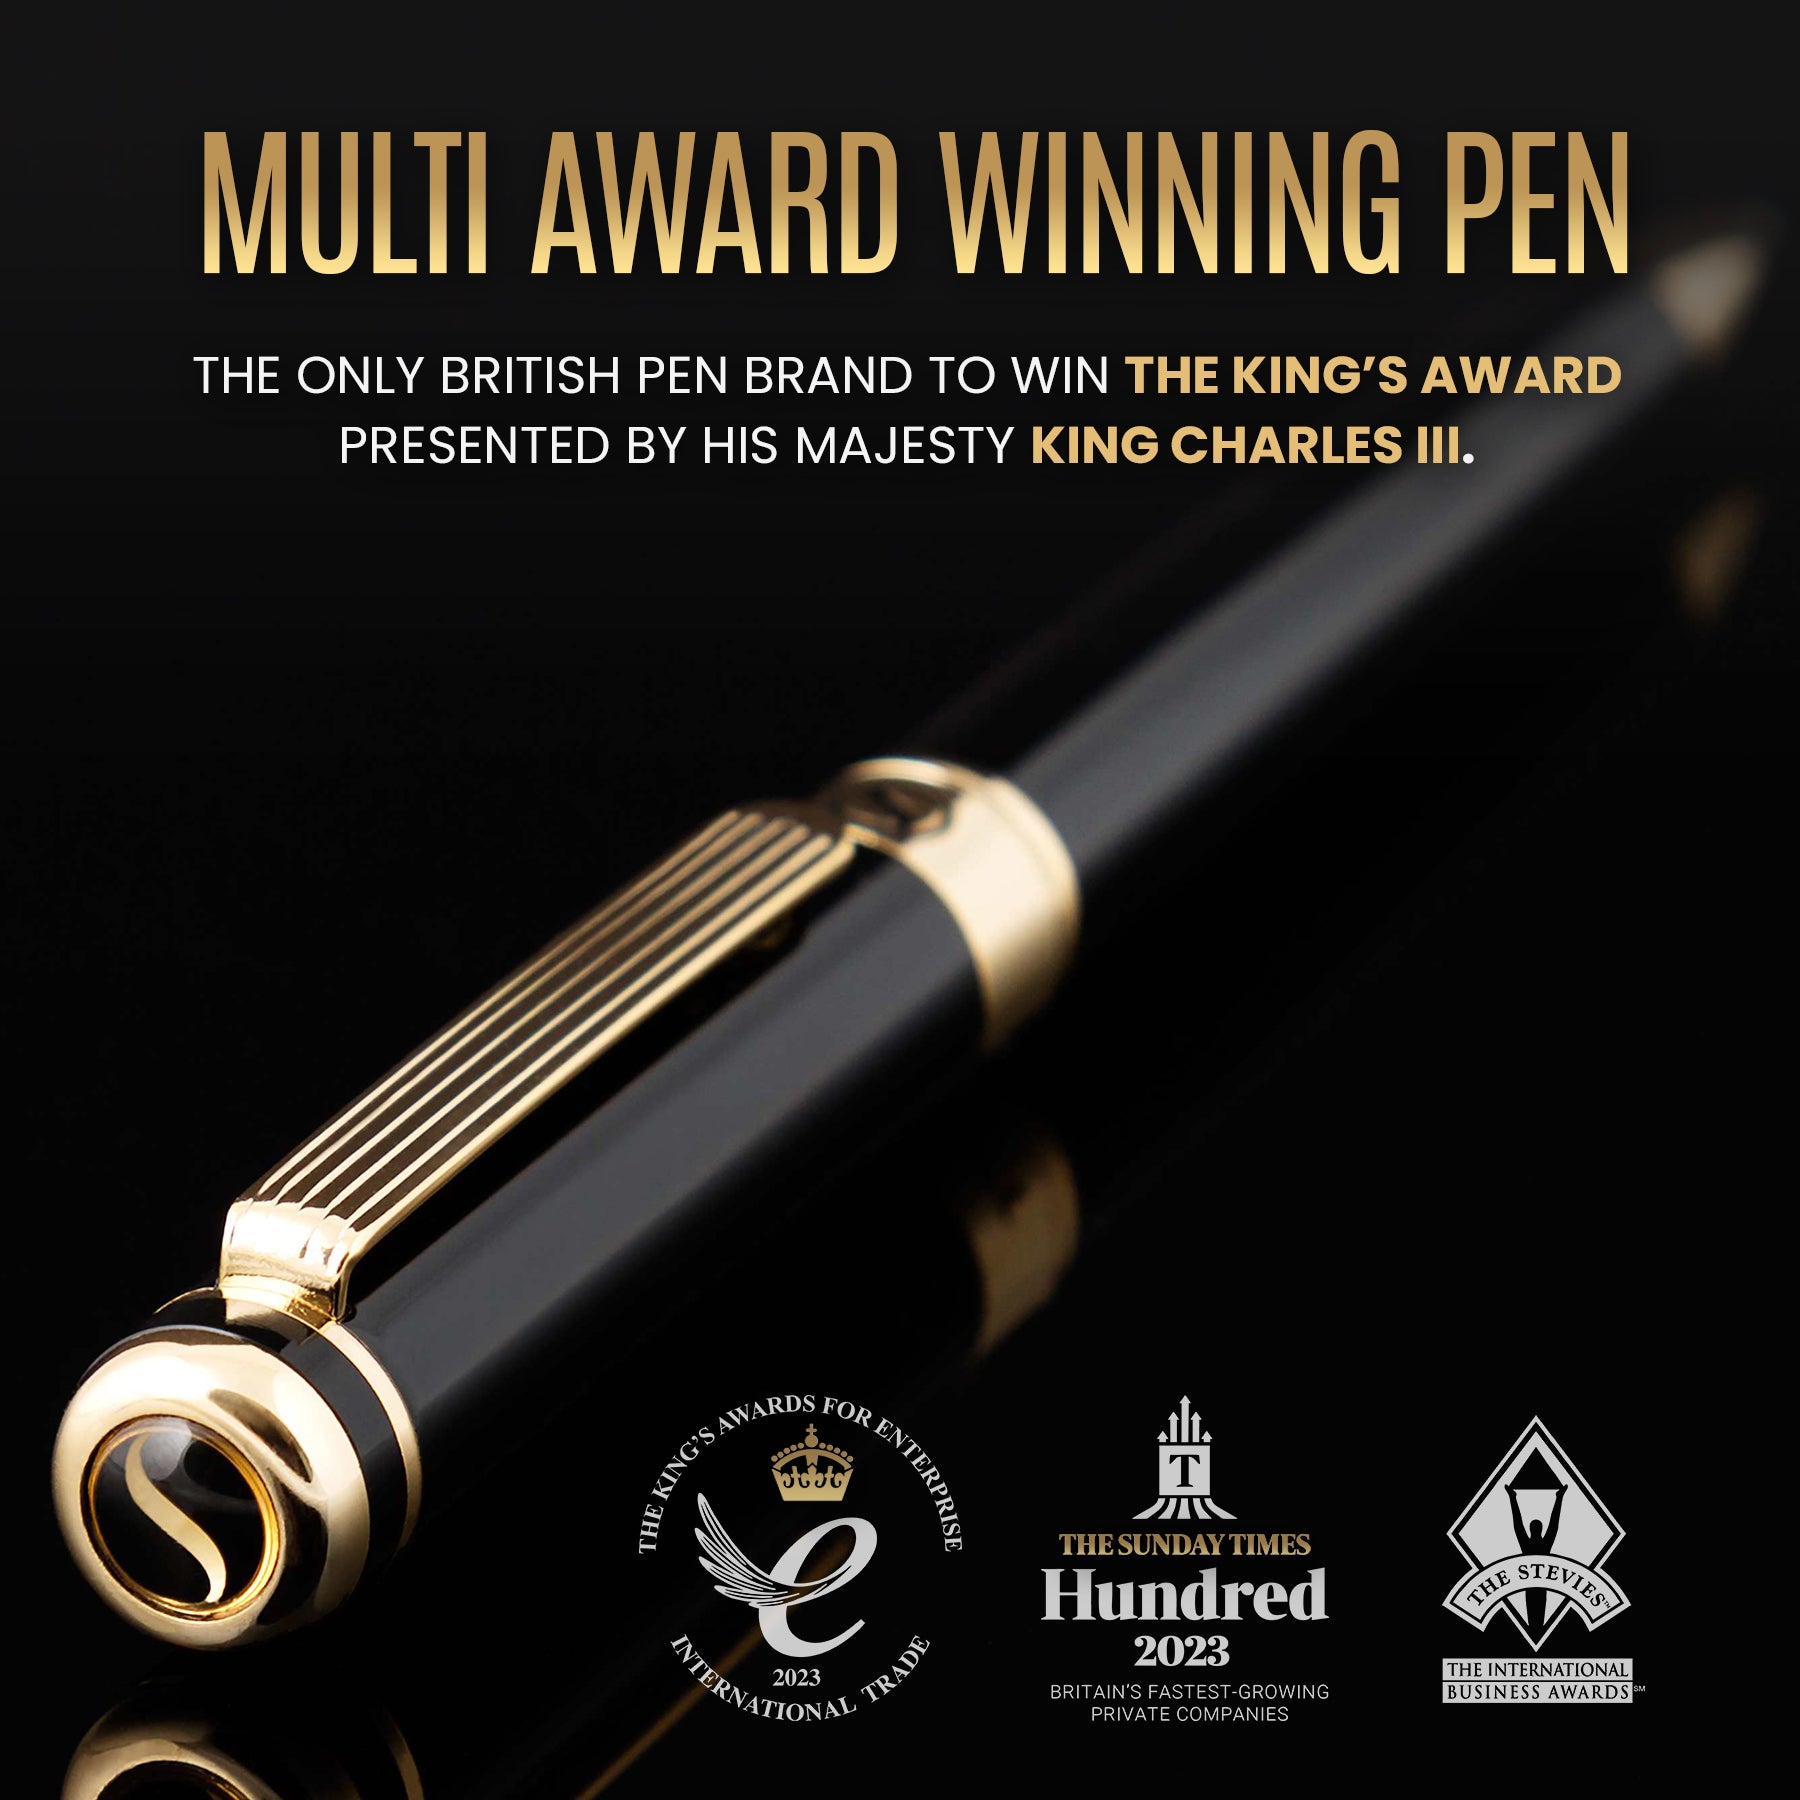 Scriveiner Classic Black Lacquer ballpoint Pen